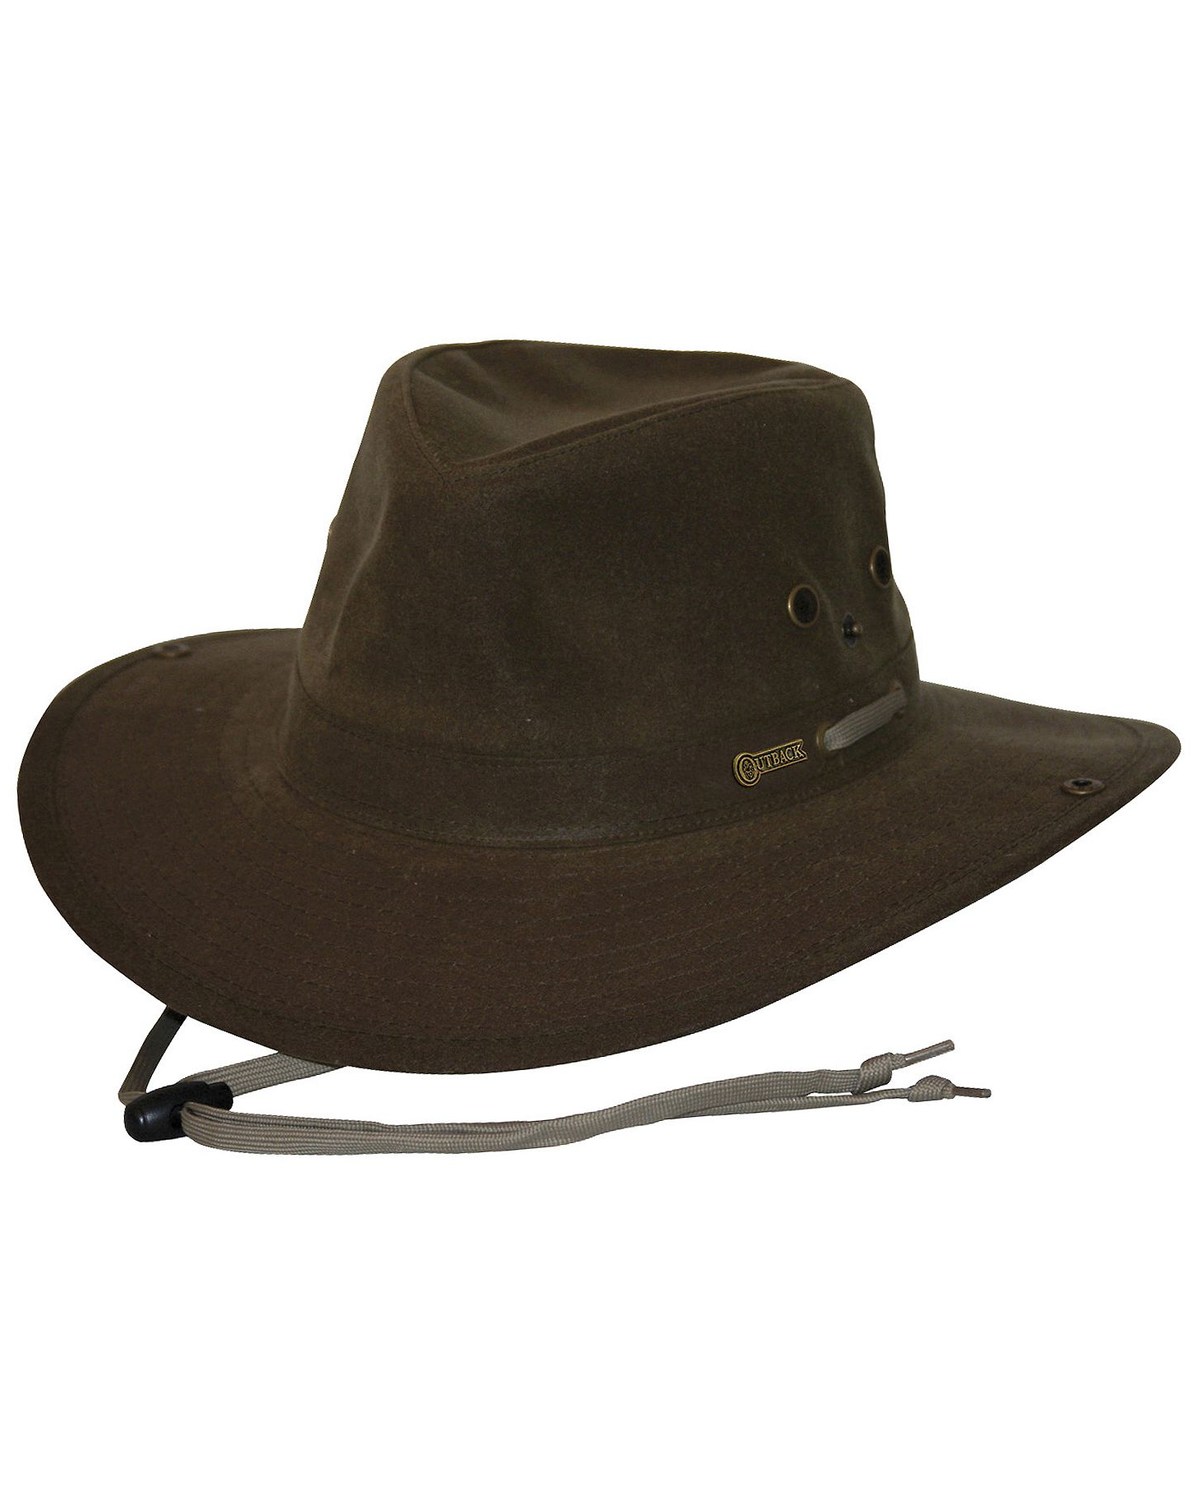 Outback Trading Co. Men's Oilskin River Guide Hat